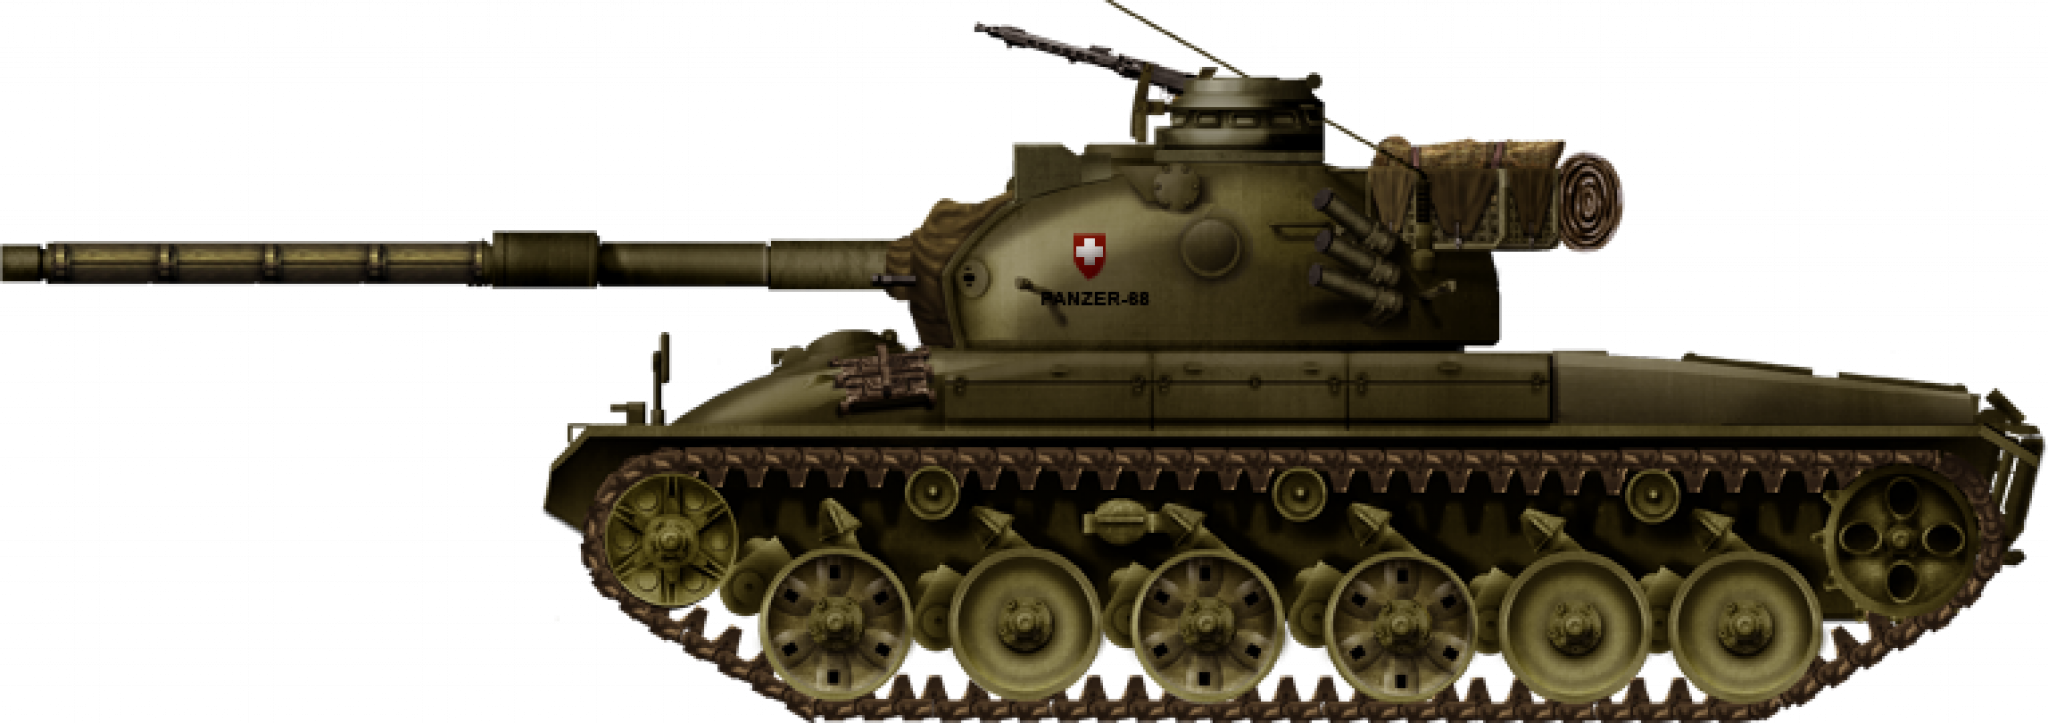 PZ 68 танк. Швейцарский танк PZ 68. Type 68 танк. Panzer 68 швейцарский.